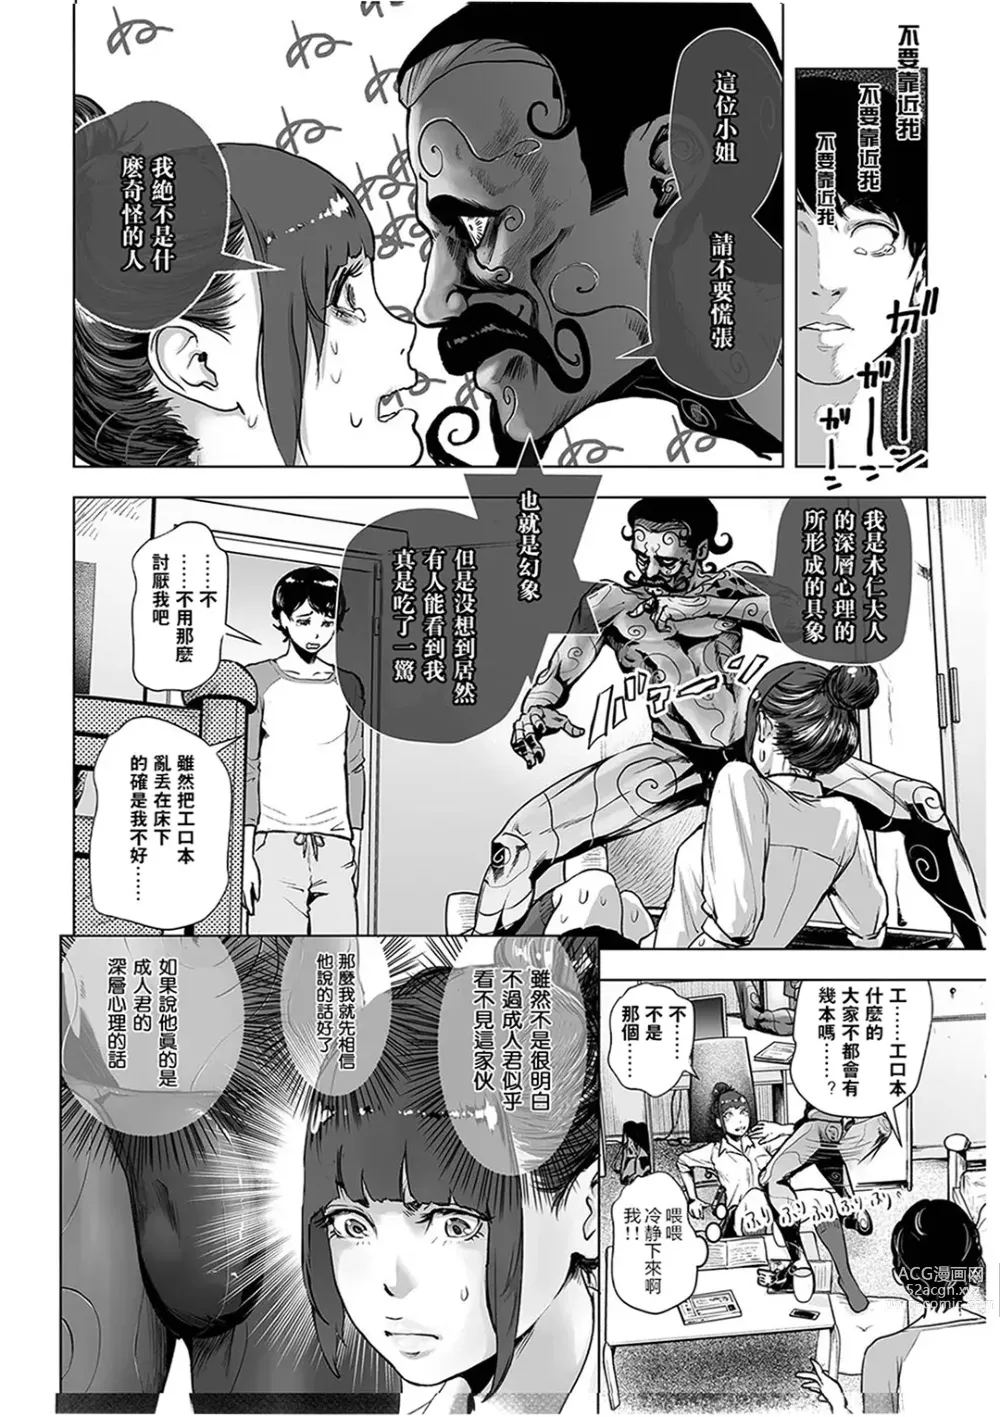 Page 7 of manga #Futsuu no Onnanoko